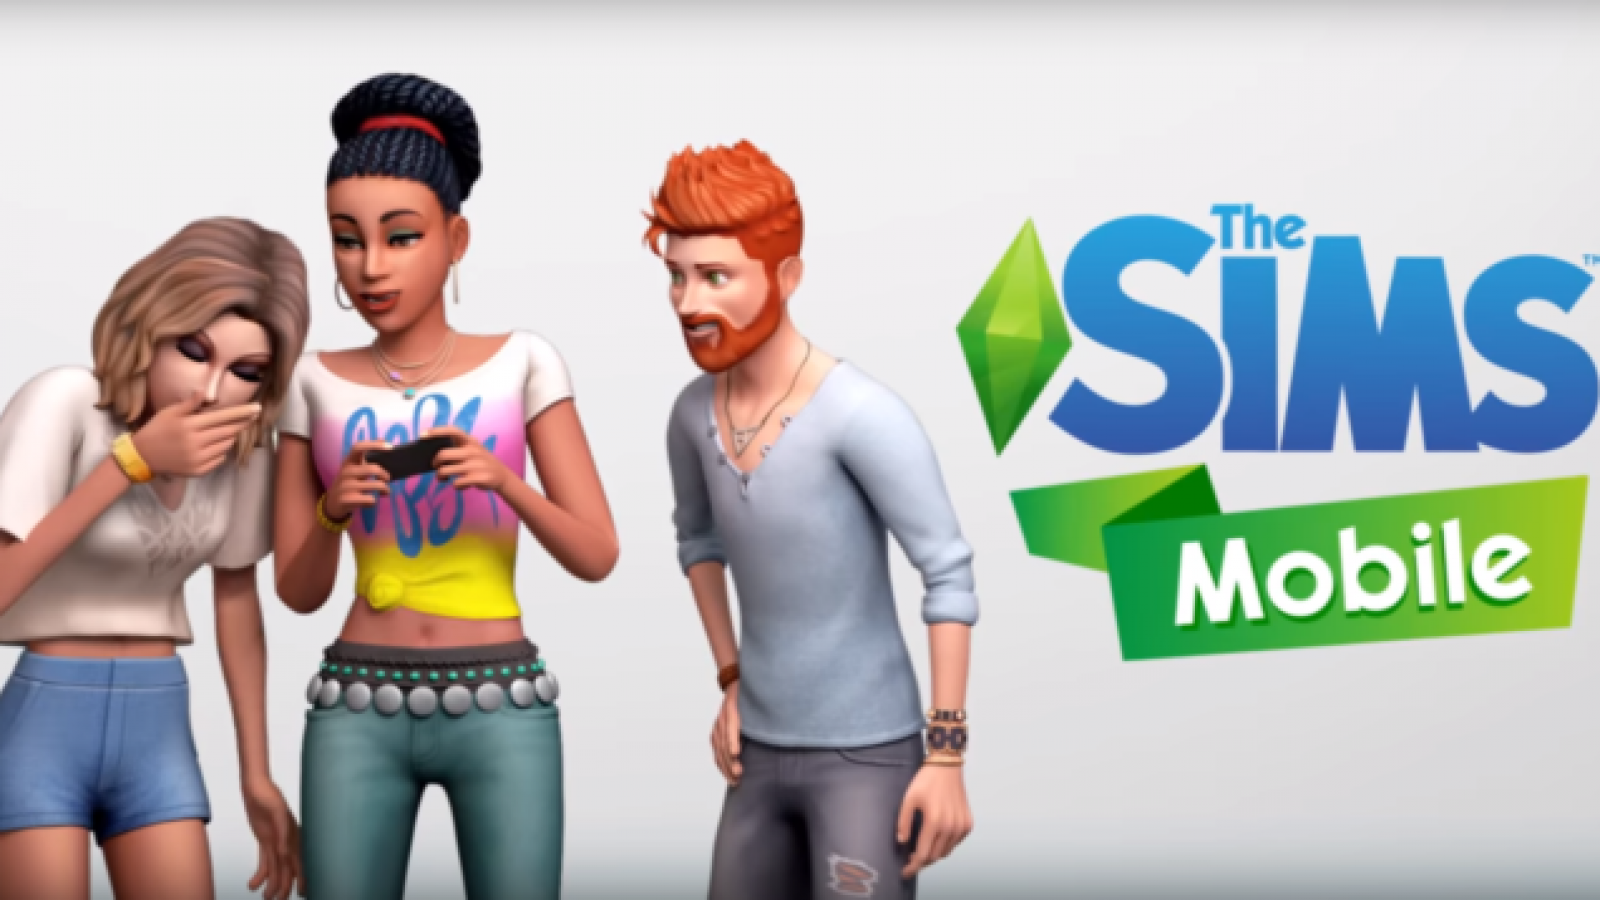 The Sims Mobile Cheats, Mod Money, Cash, Coins, simeleons 2017